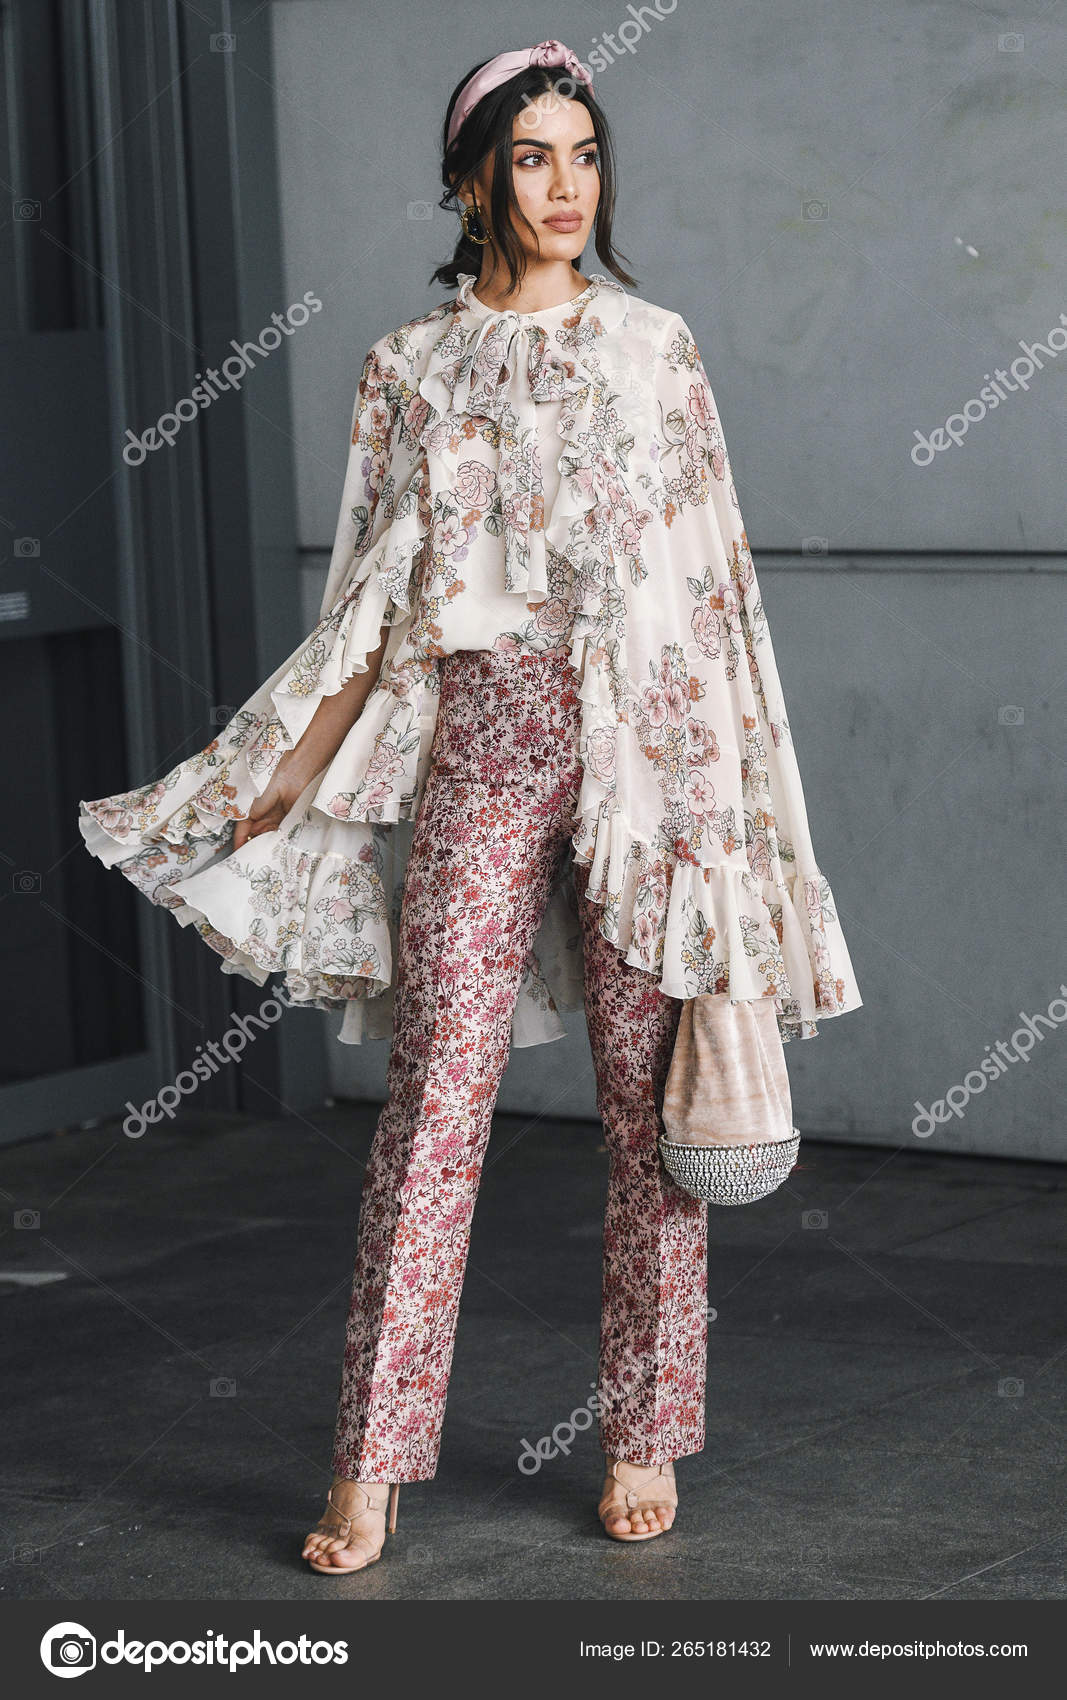 Camila Coelho  Fashion, Street style, Fashion outfits